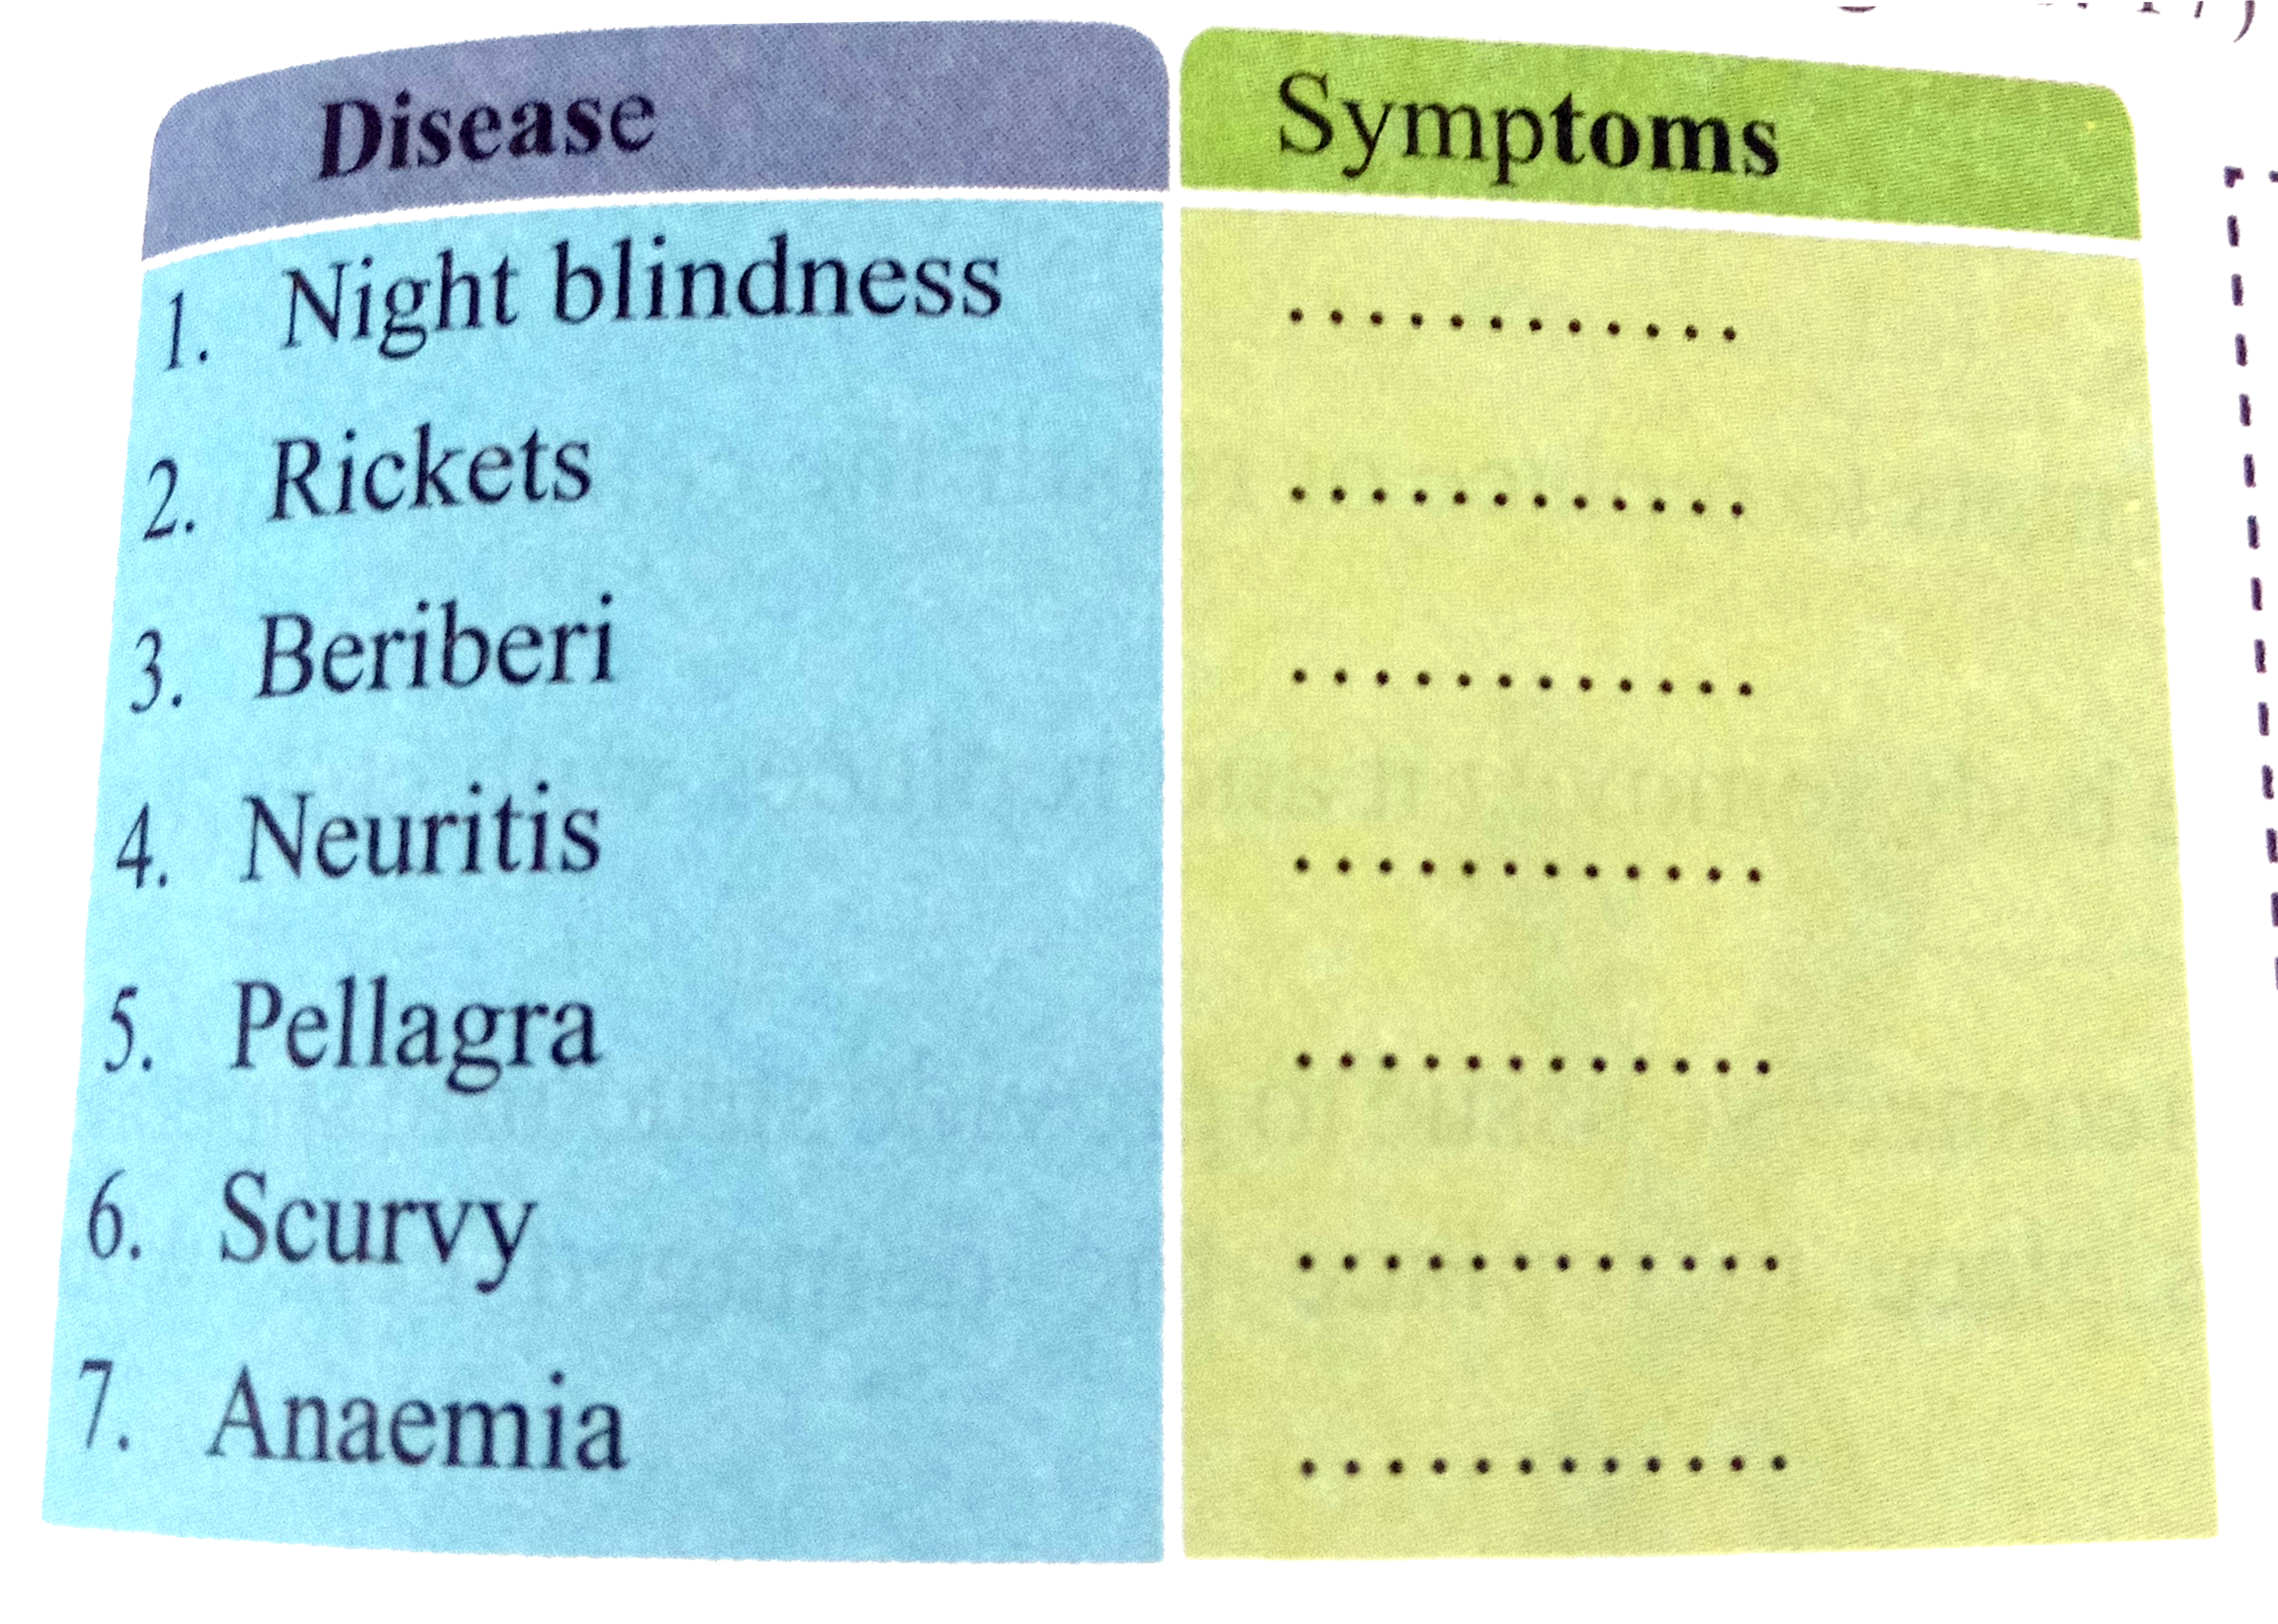 What are symptoms of diseases like night blindness, rickets, beriberi, nutritis, pellagra, anemia , scurvy ?